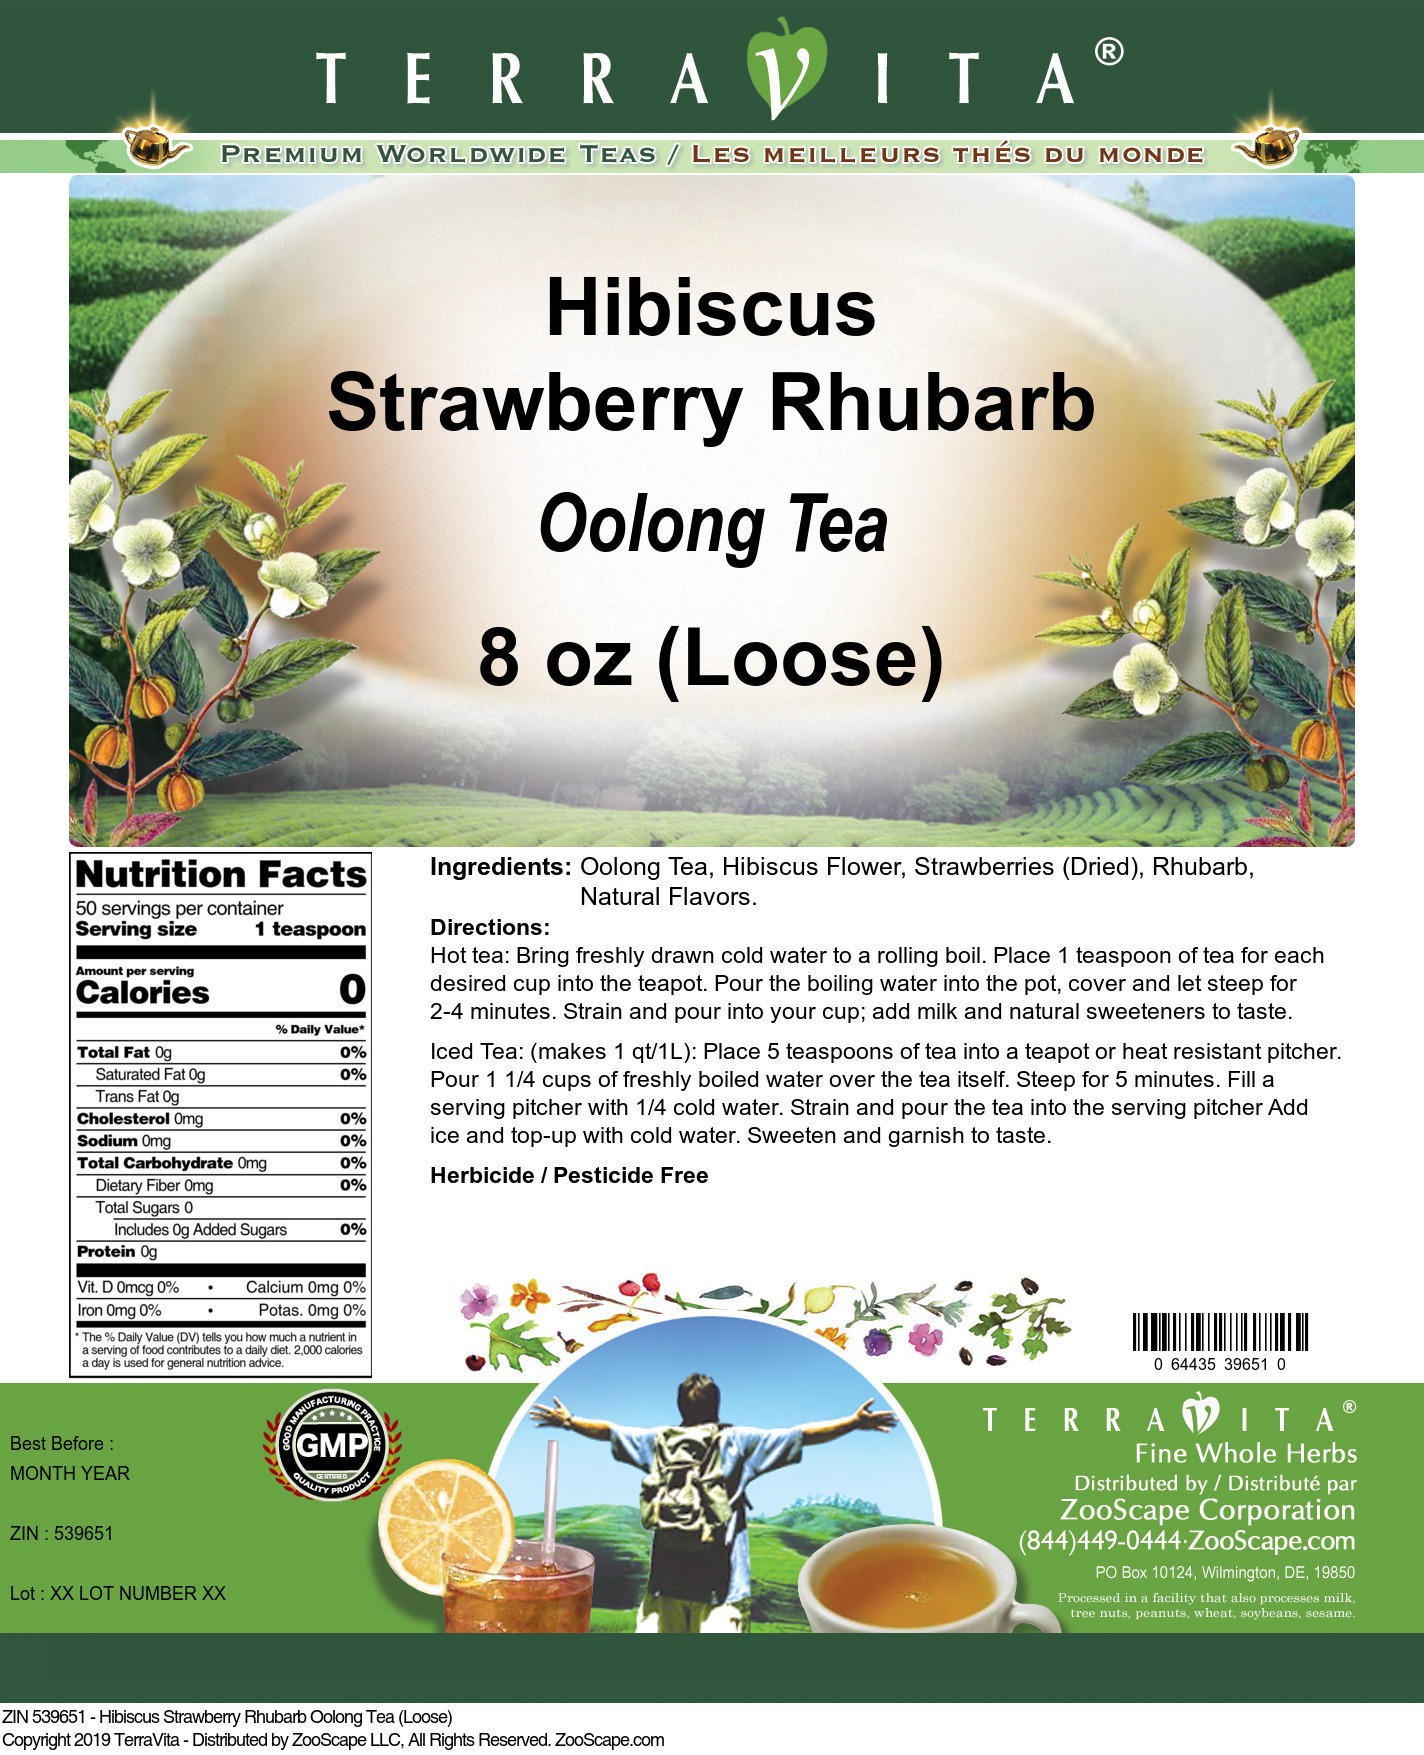 Hibiscus Strawberry Rhubarb Oolong Tea (Loose) - Label